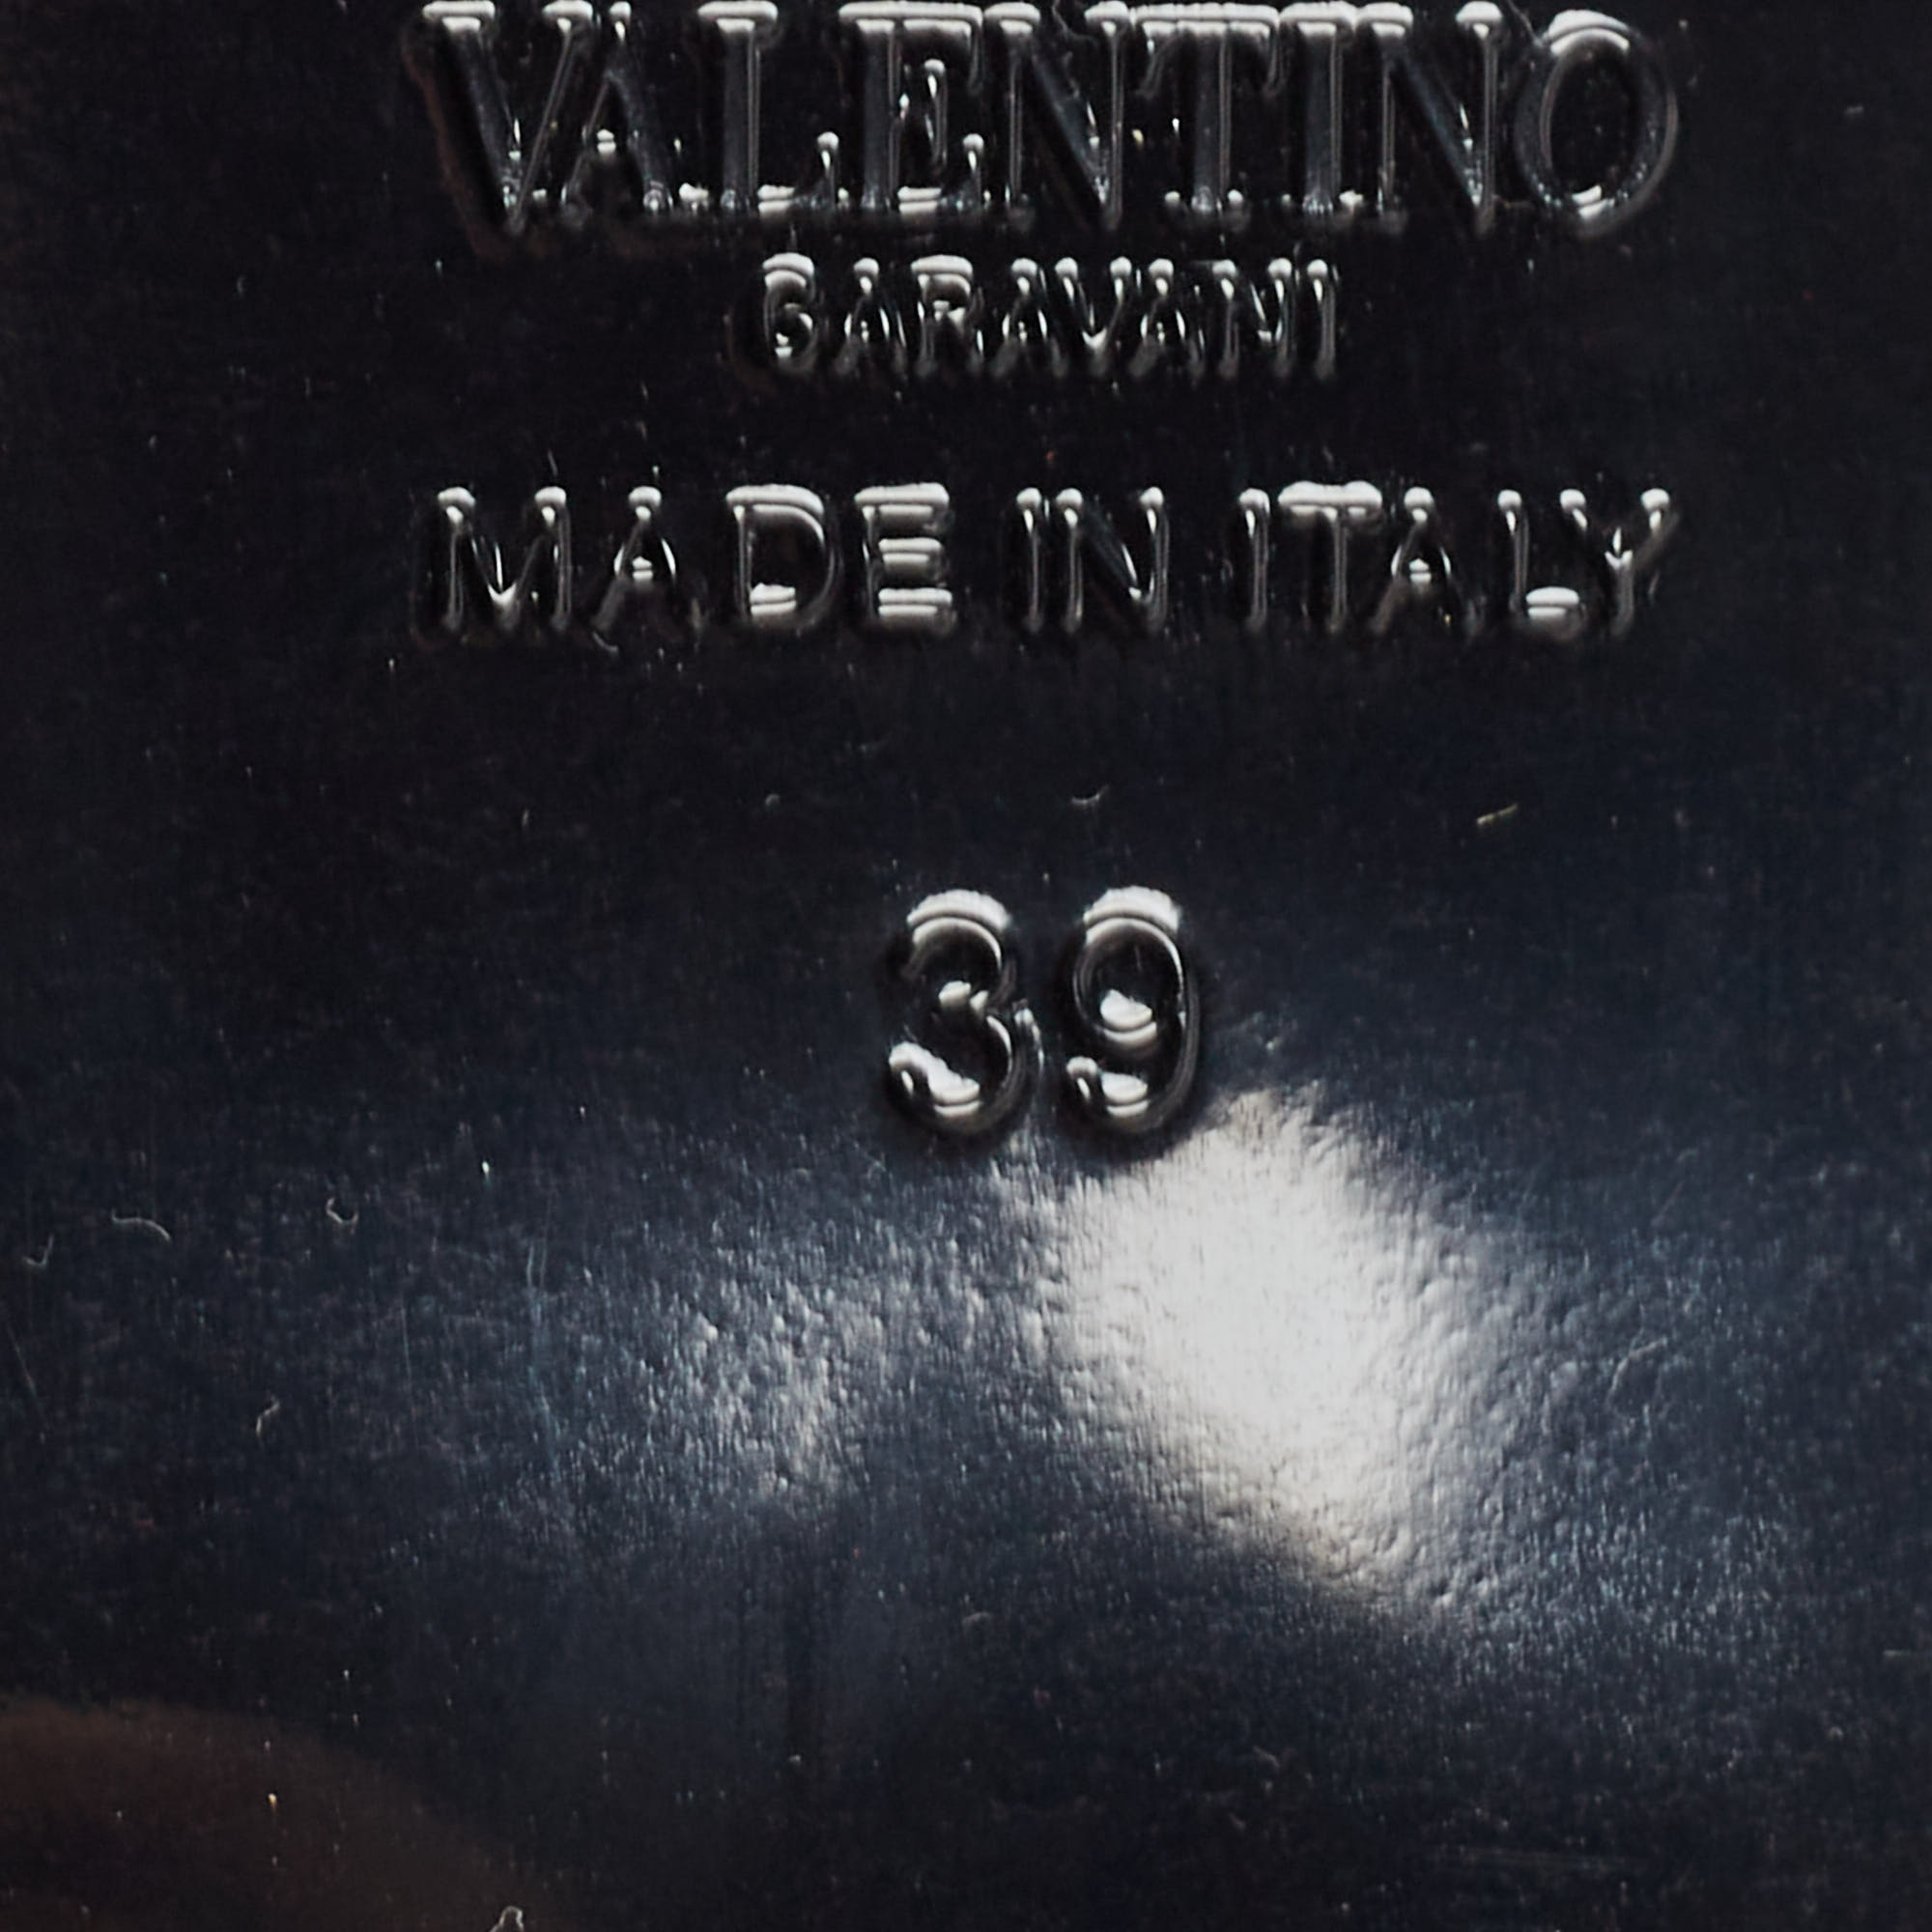 Valentino Black Rubber Rockstud Flat Sandals Size 39